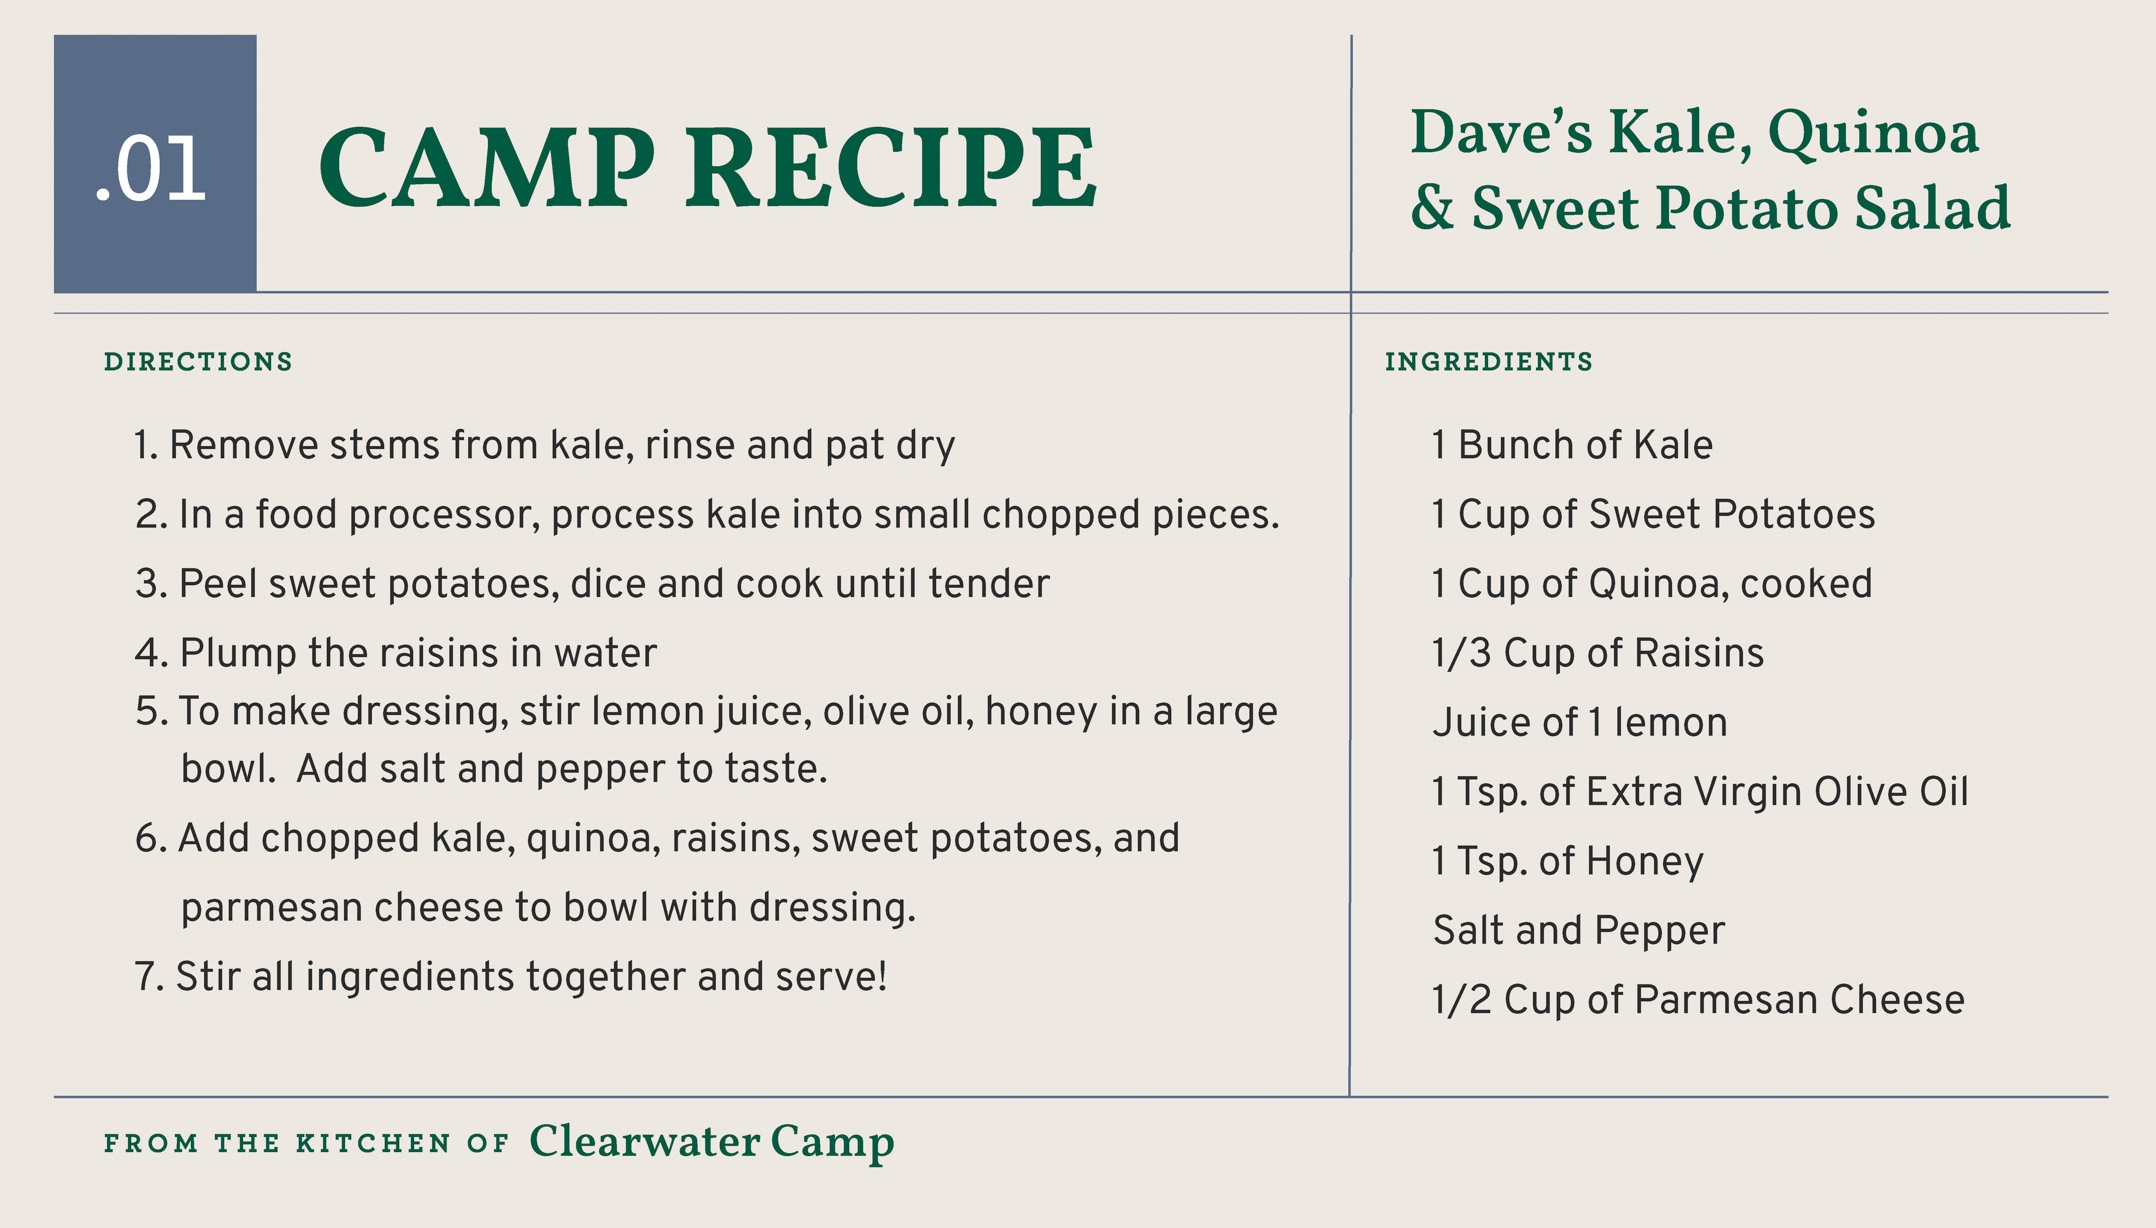 Chef Dave's kale, quinoa, and sweet potato salad